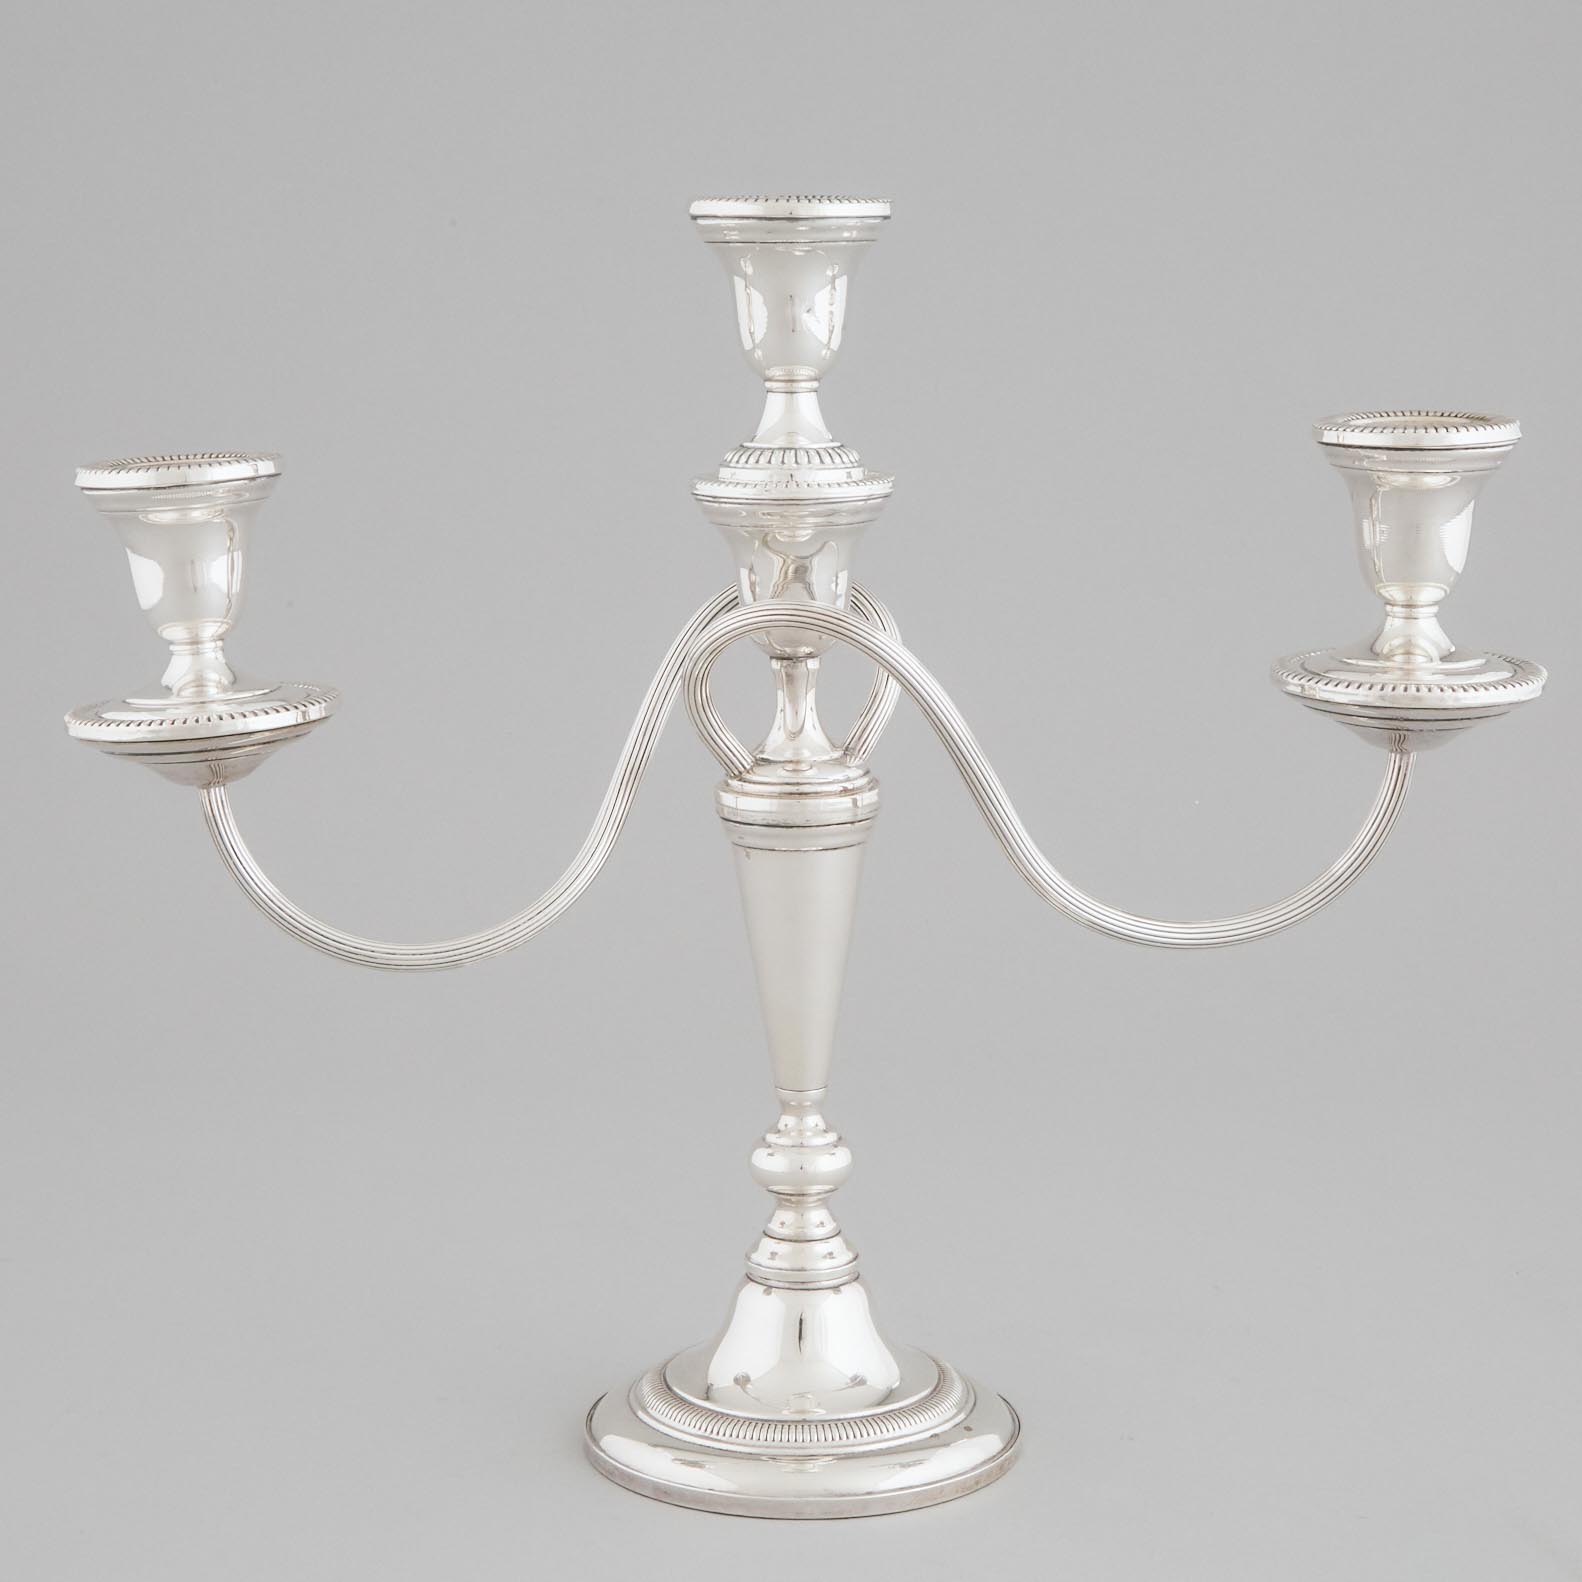 American Silver Three-Light Candelabrum, J.E. Caldwell & Co., Philadelphia, Pa., early 20th century